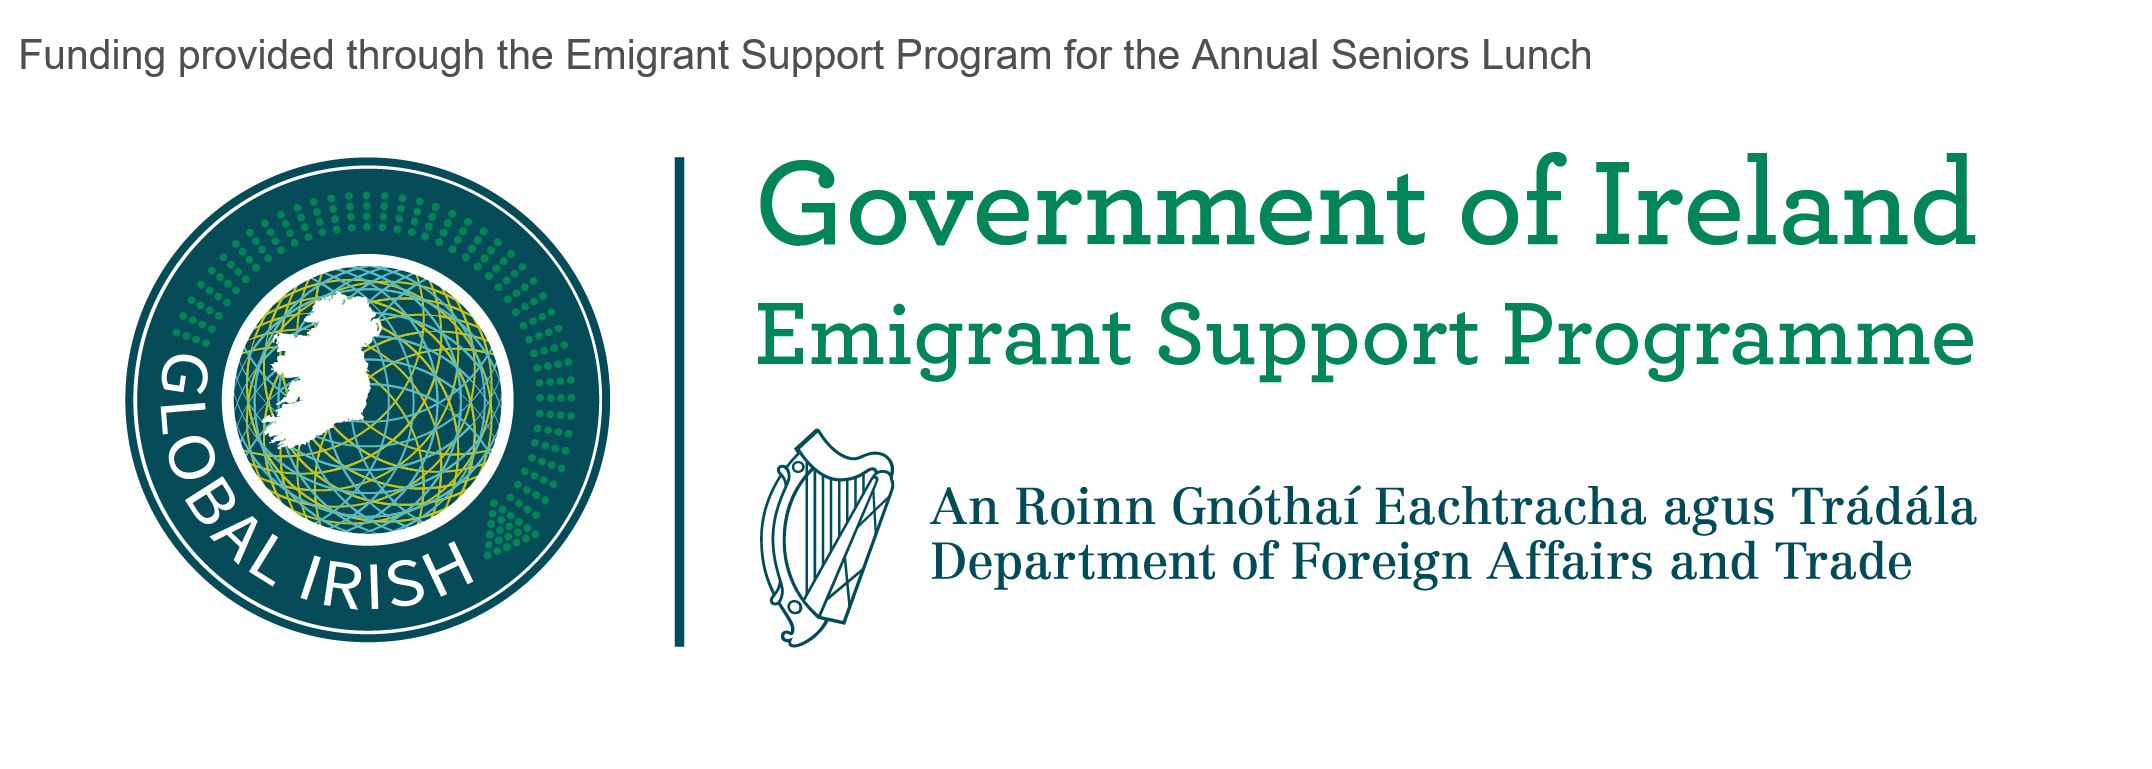 Government of Ireland Emigrant Support Program